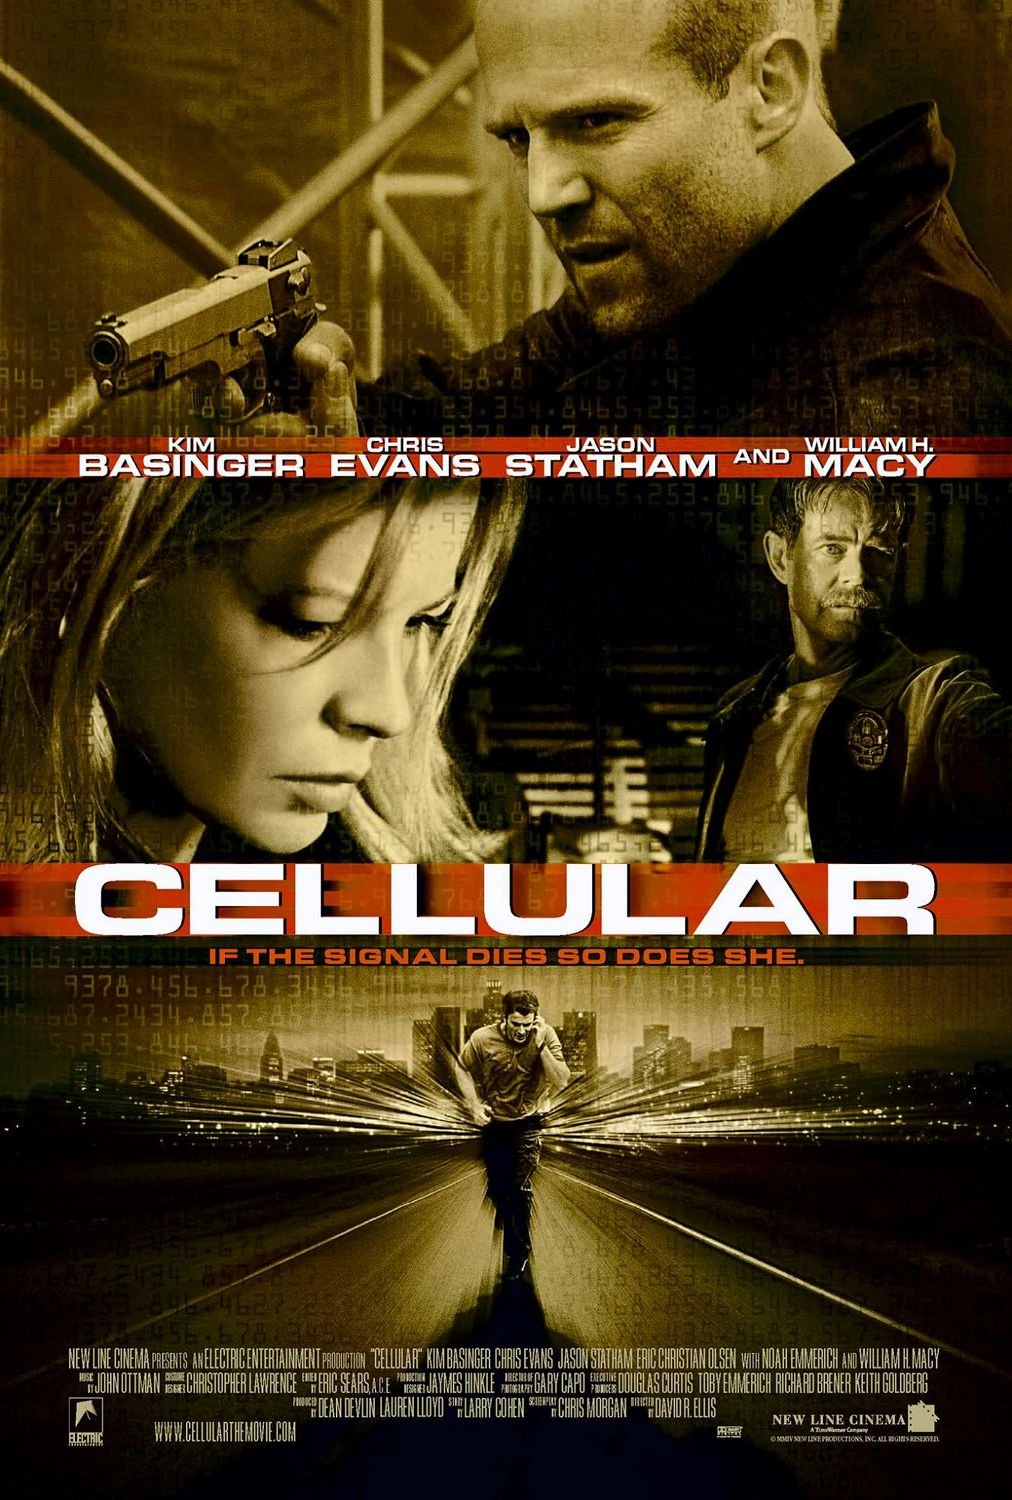 FULL MOVIE: Cellular (2004) [Action]